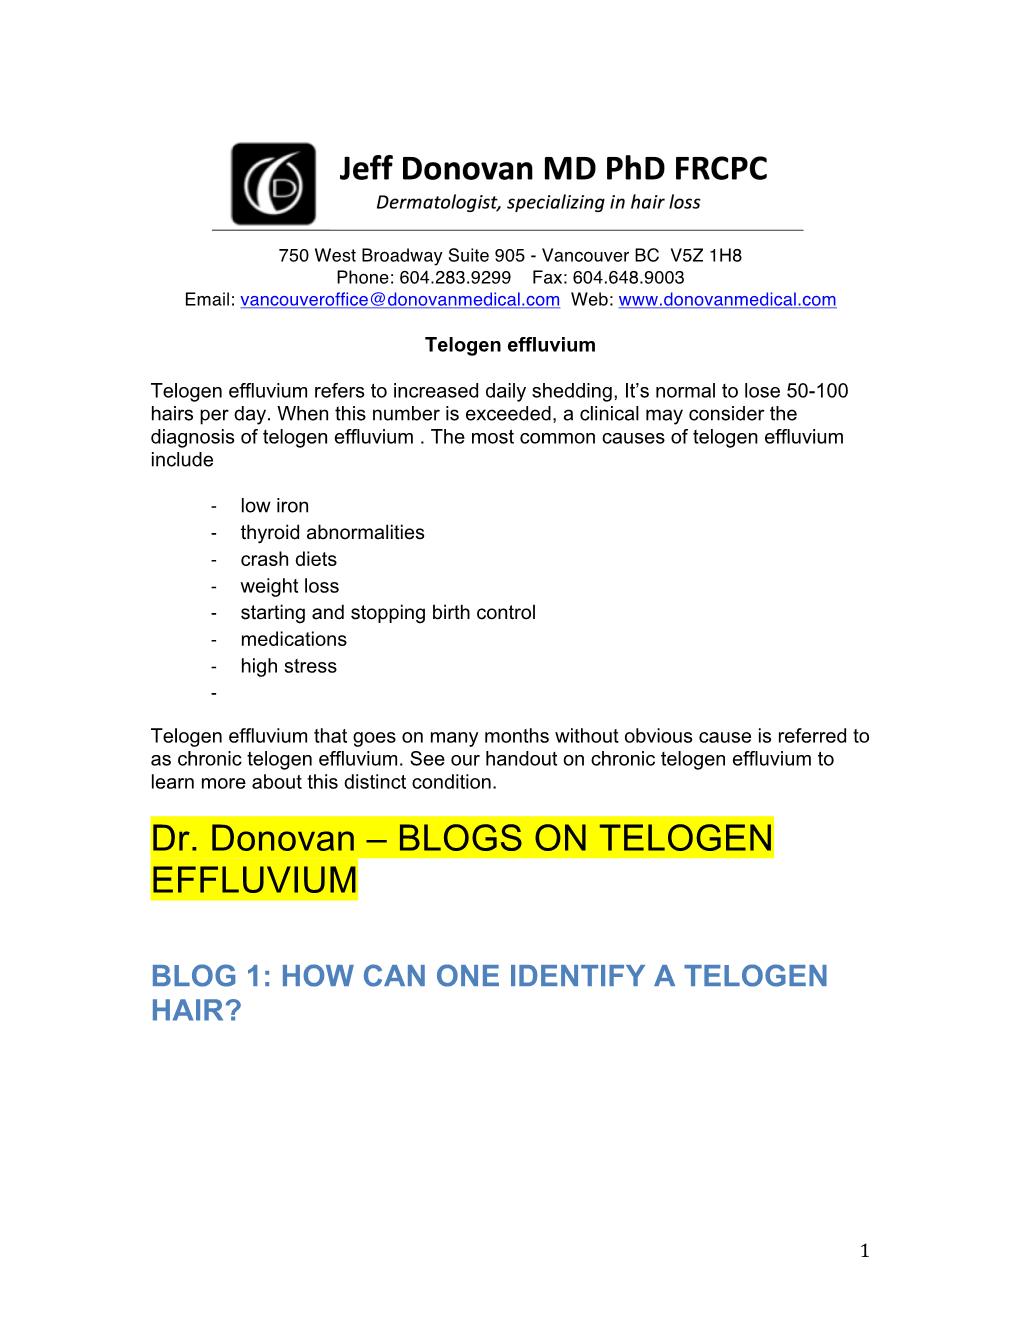 Dr. Donovan – BLOGS on TELOGEN EFFLUVIUM